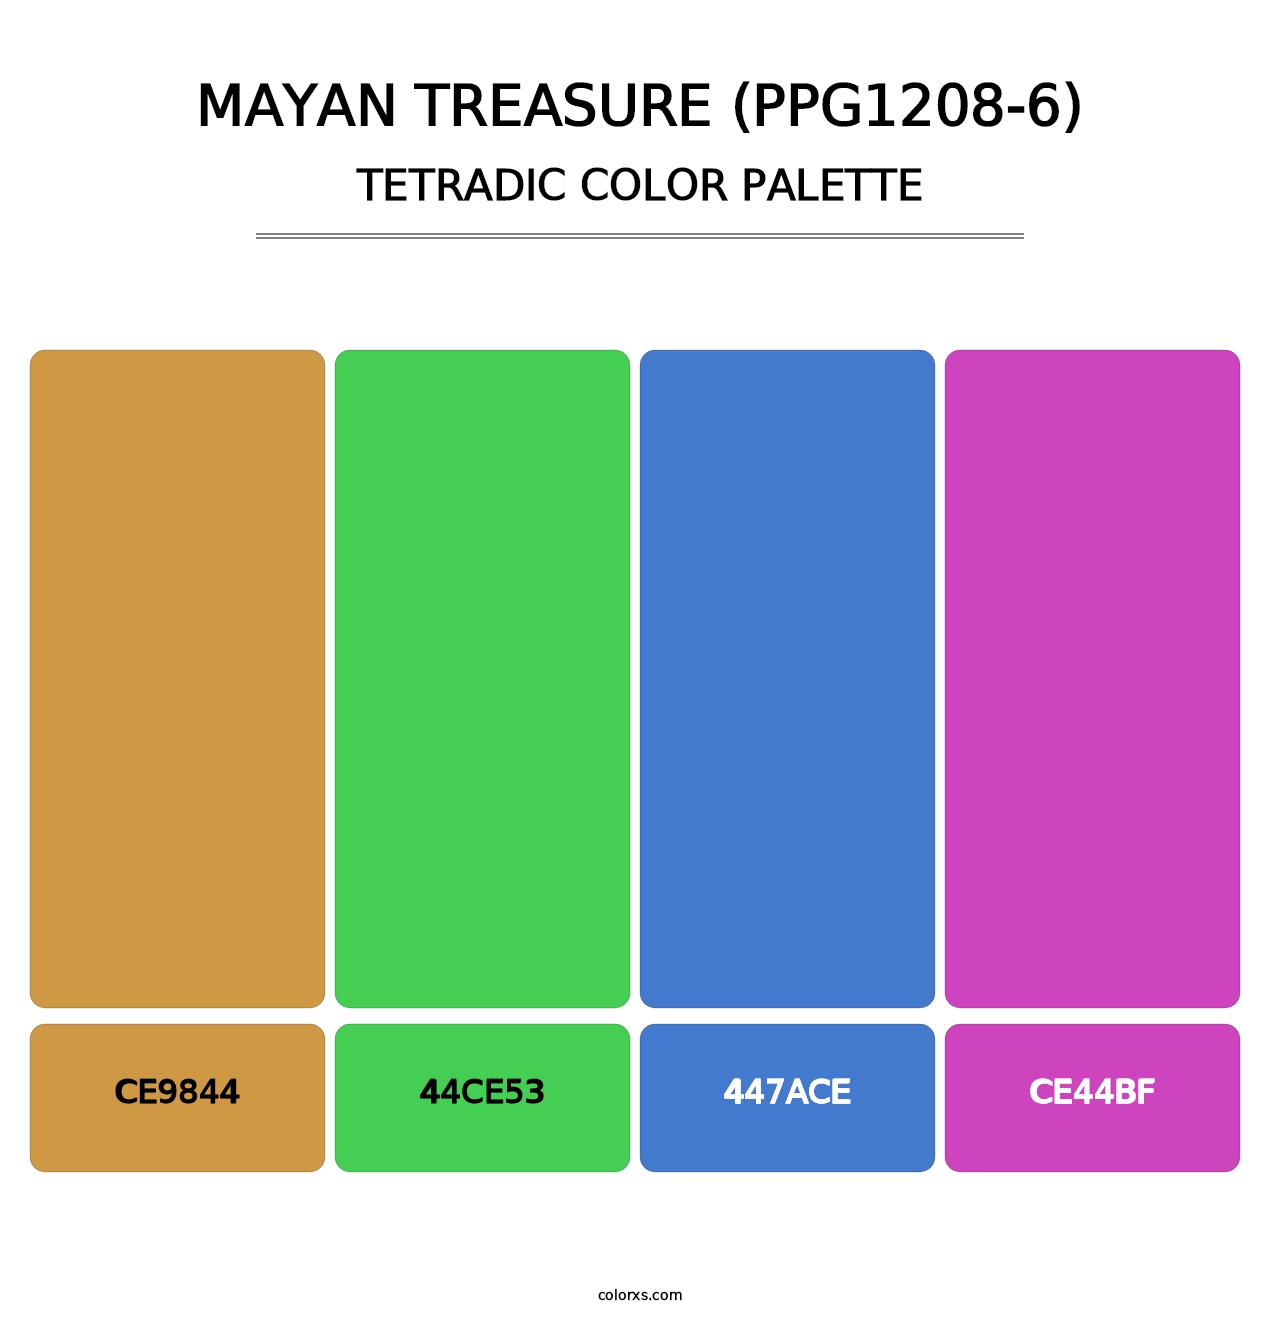 Mayan Treasure (PPG1208-6) - Tetradic Color Palette